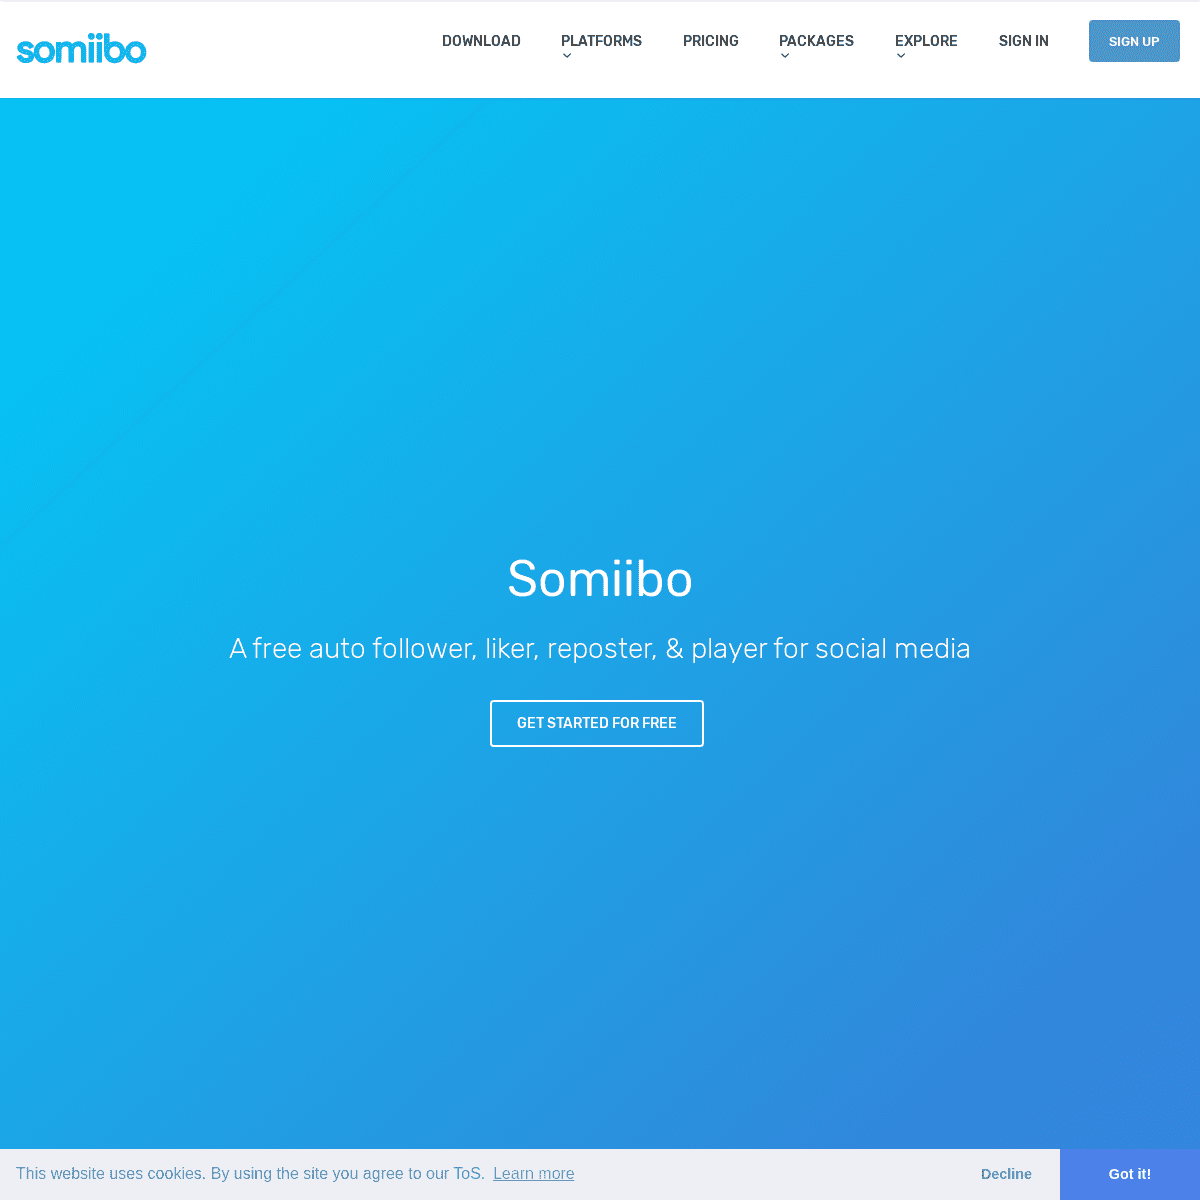 A complete backup of somiibo.com